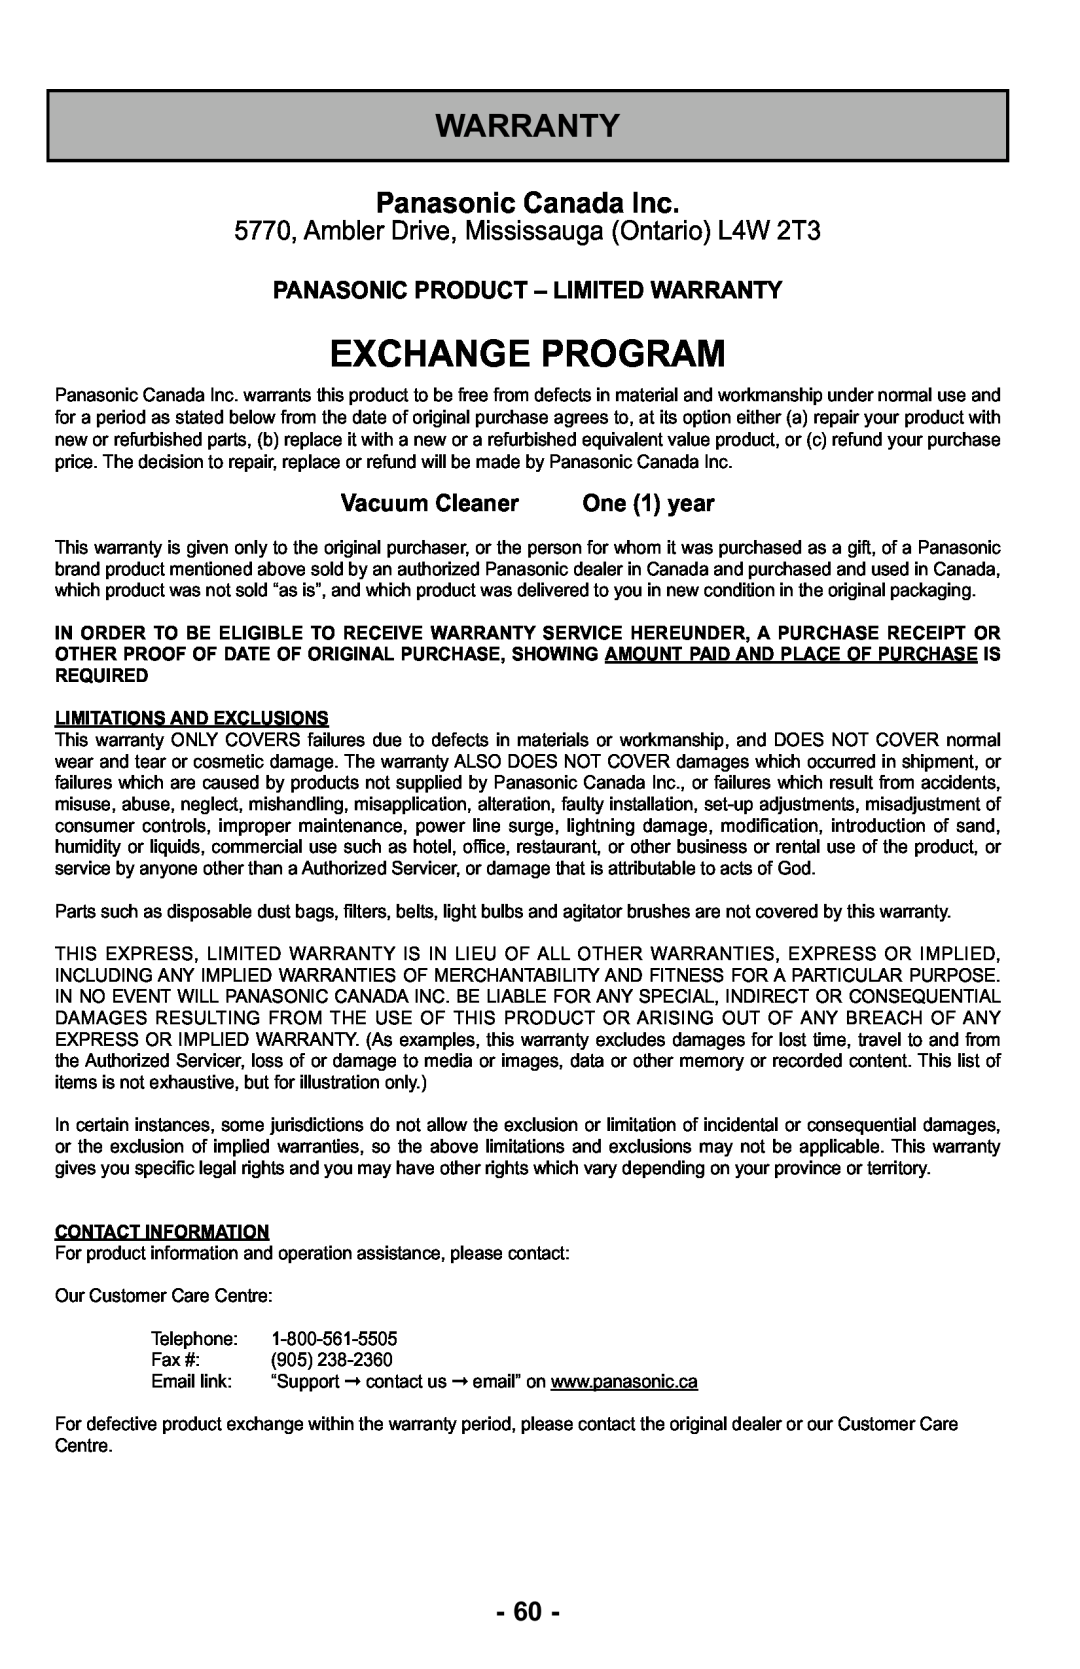 Panasonic MC-UL425 Exchange Program, Warranty, Panasonic Canada Inc, 5770, Ambler Drive, Mississauga Ontario L4W 2T3 